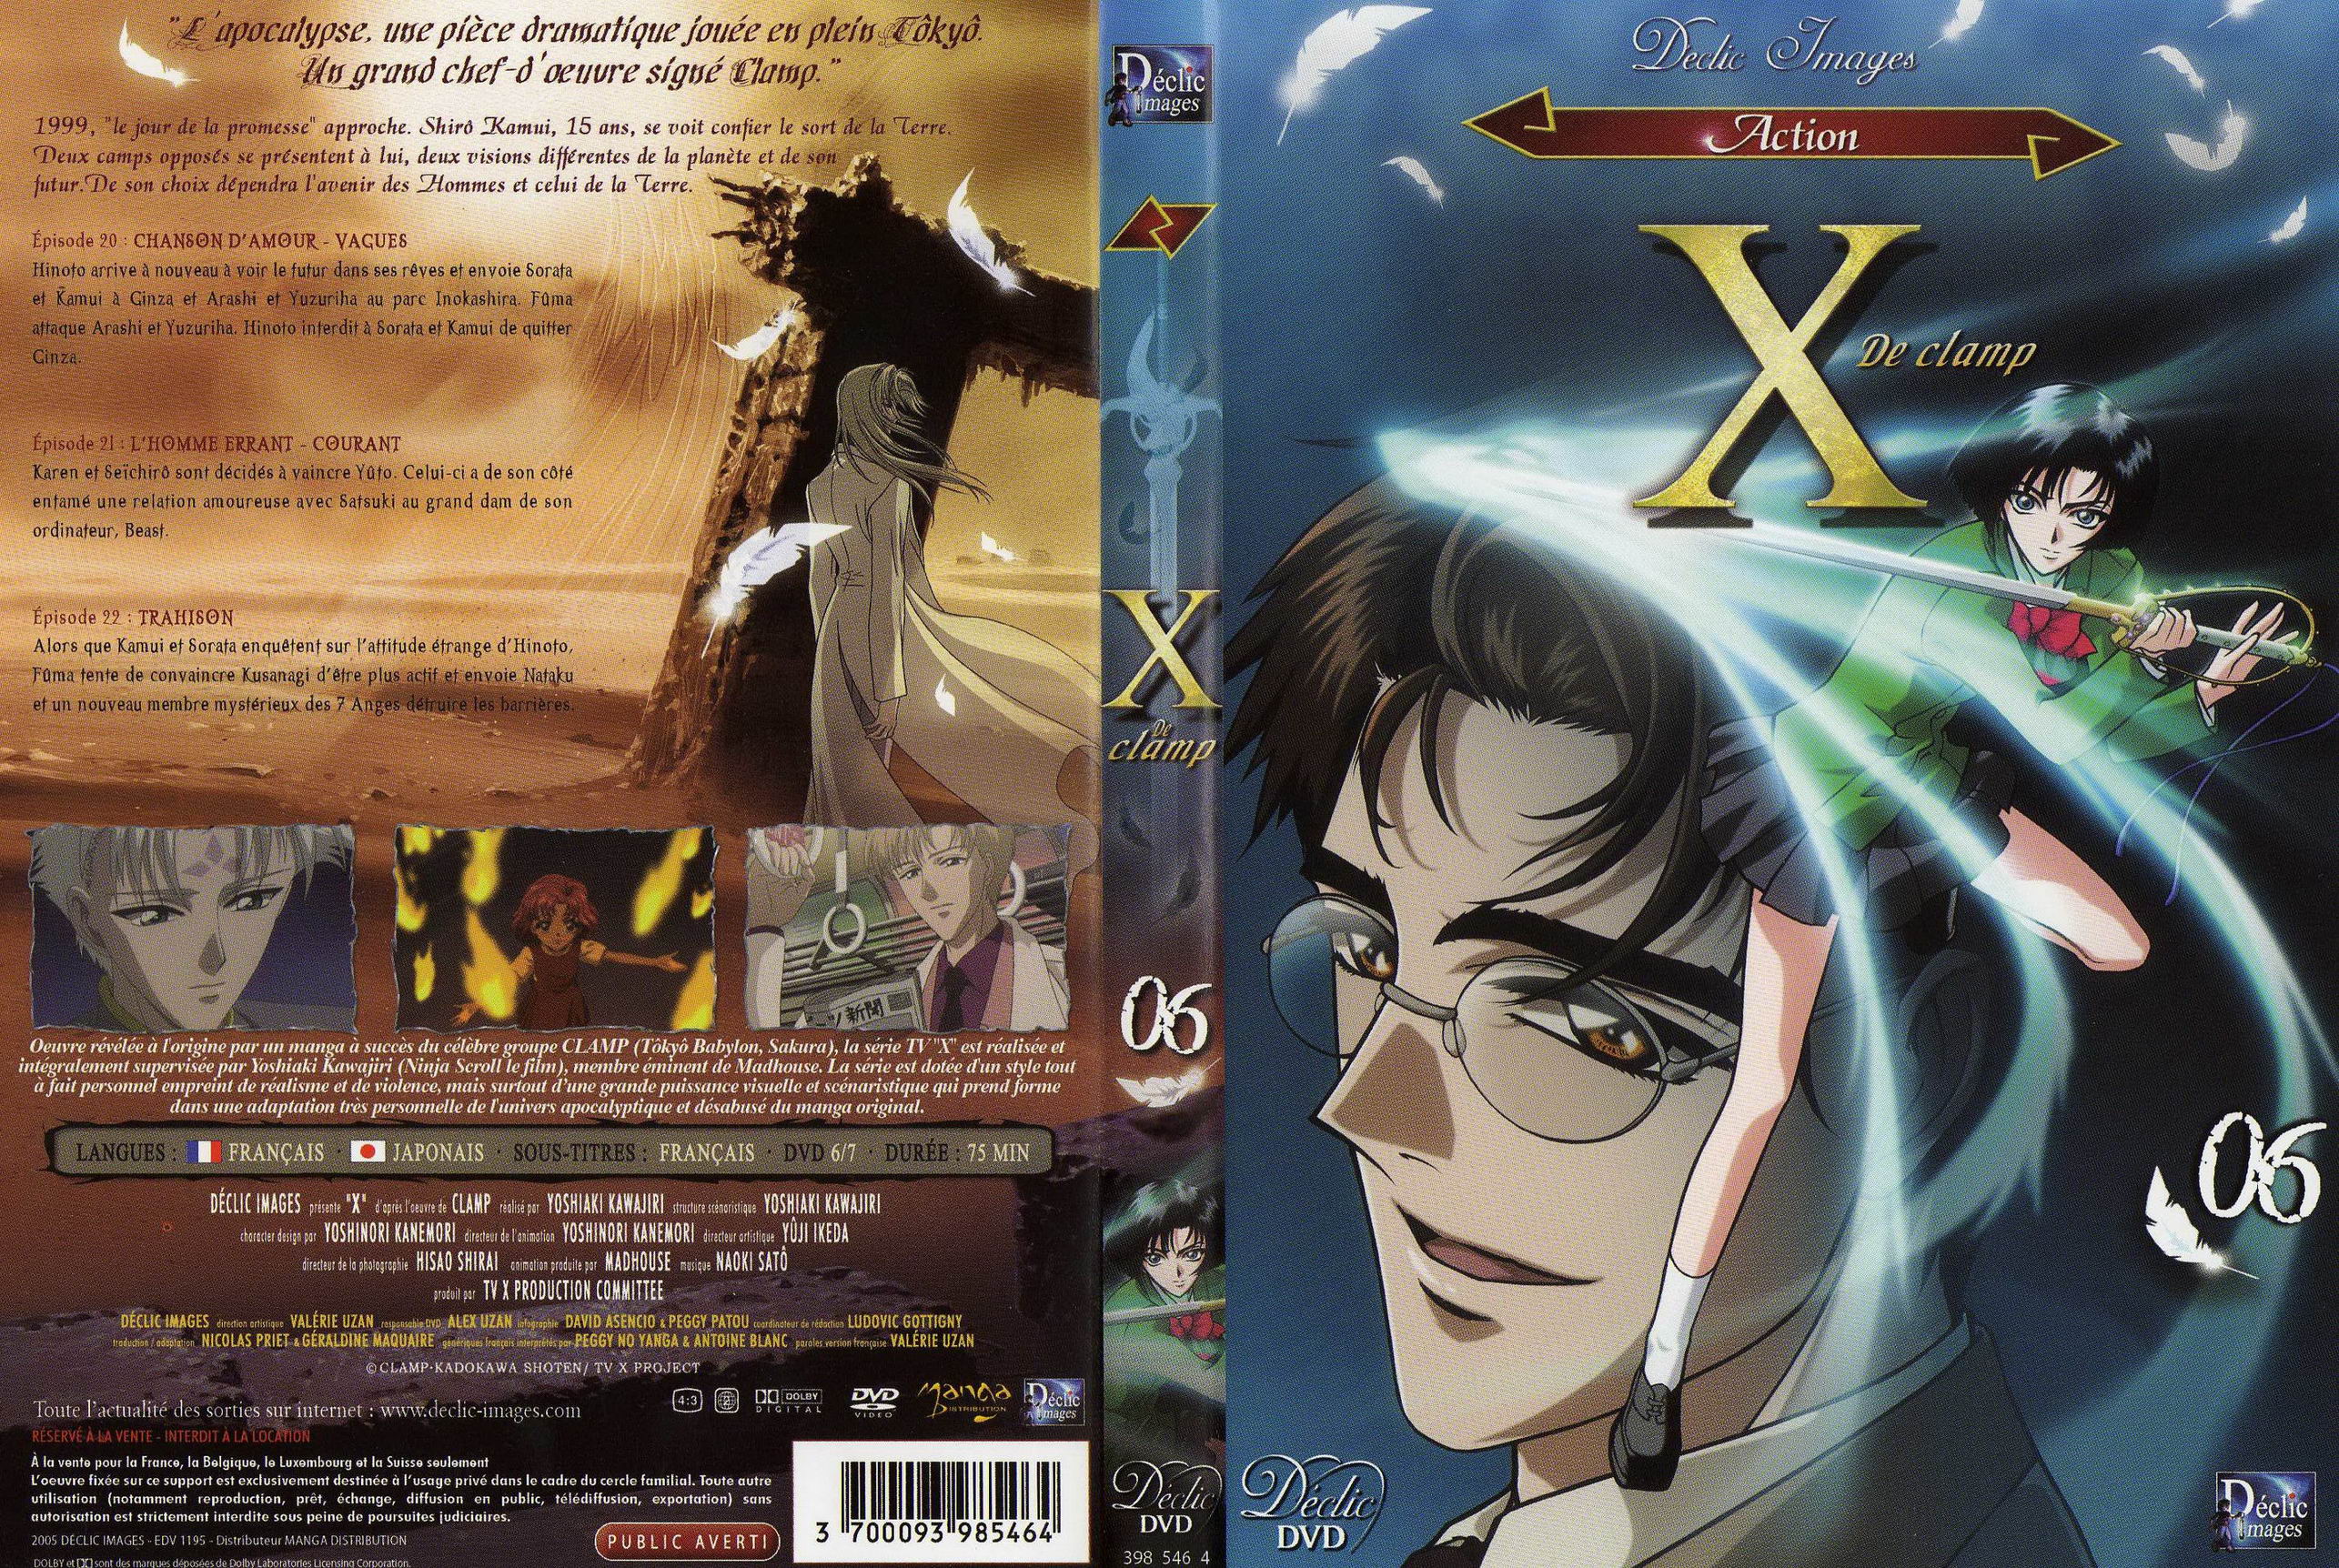 Jaquette DVD X de clamp vol 6